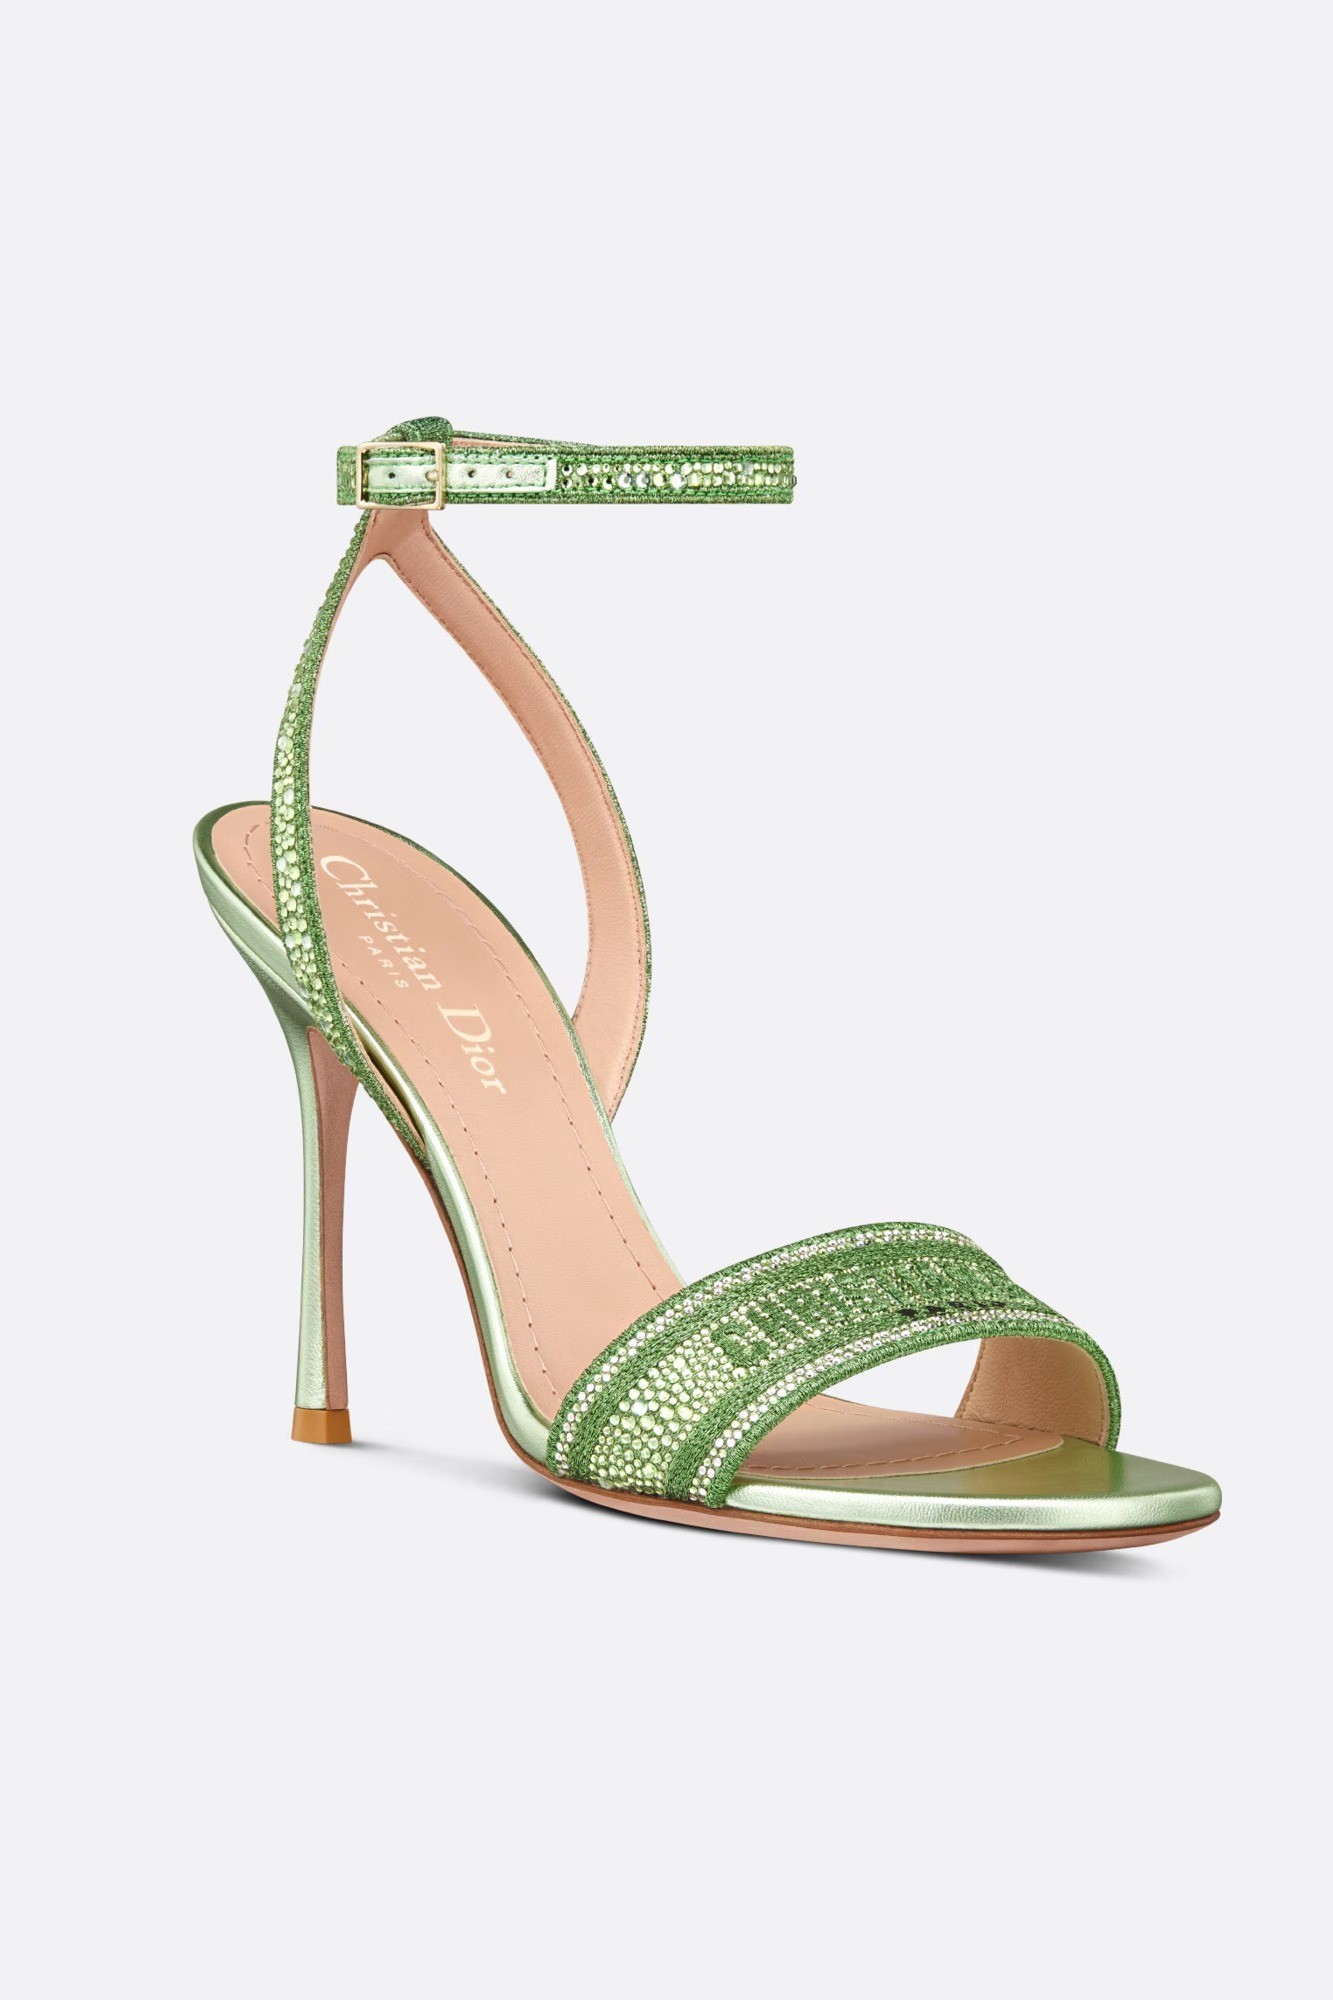 Dior - Dway Heeled Sandal -Green